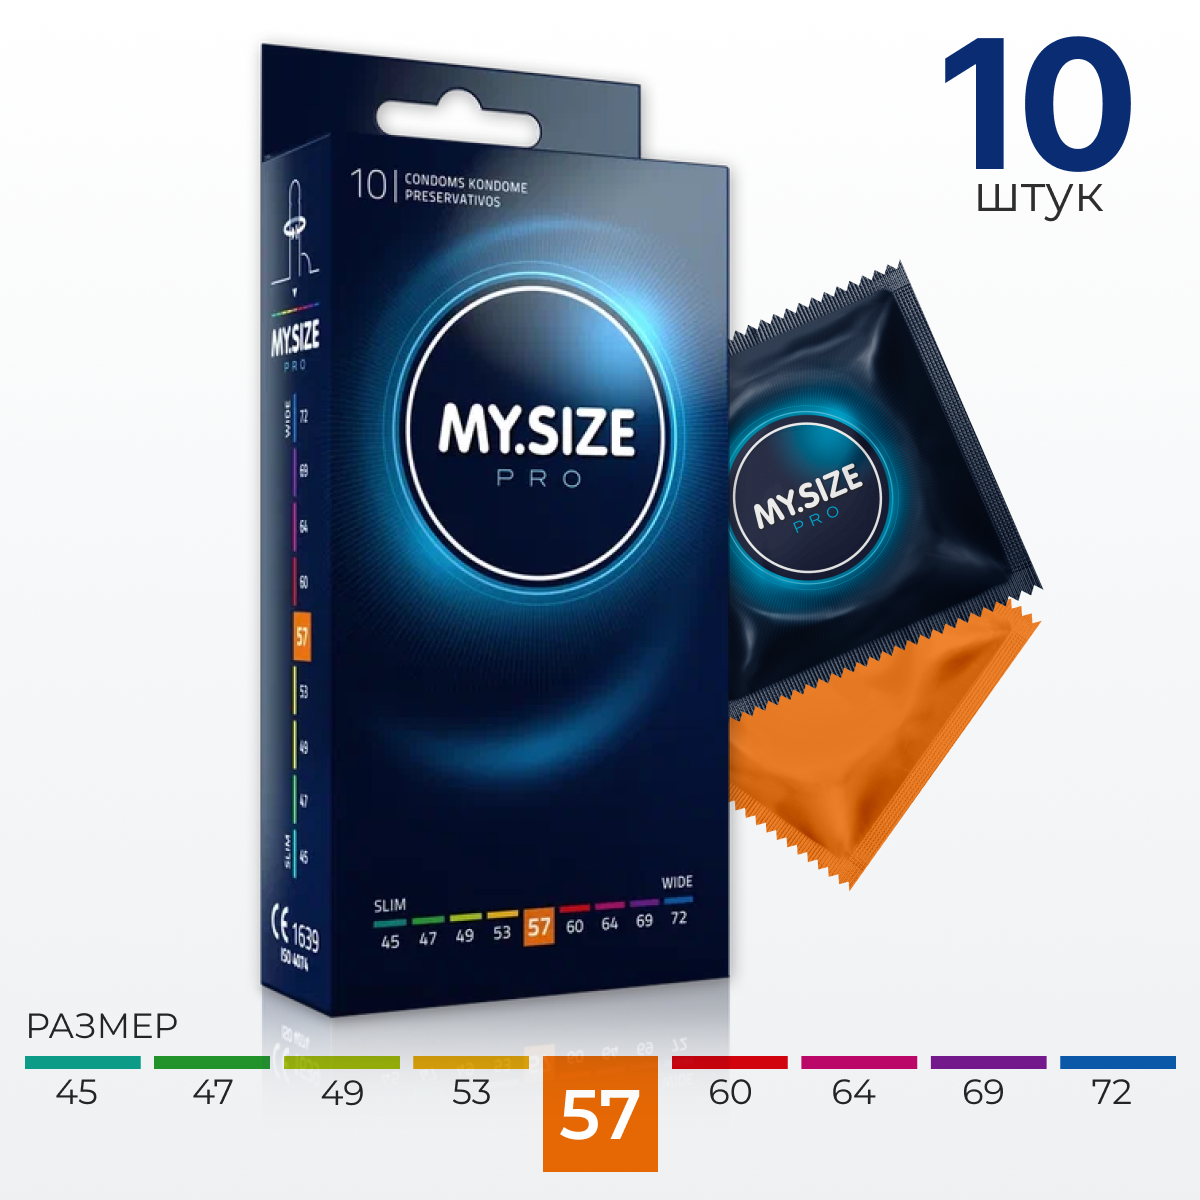 Презервативы "MY.SIZE" №10 размер 57 (ширина 57MM)